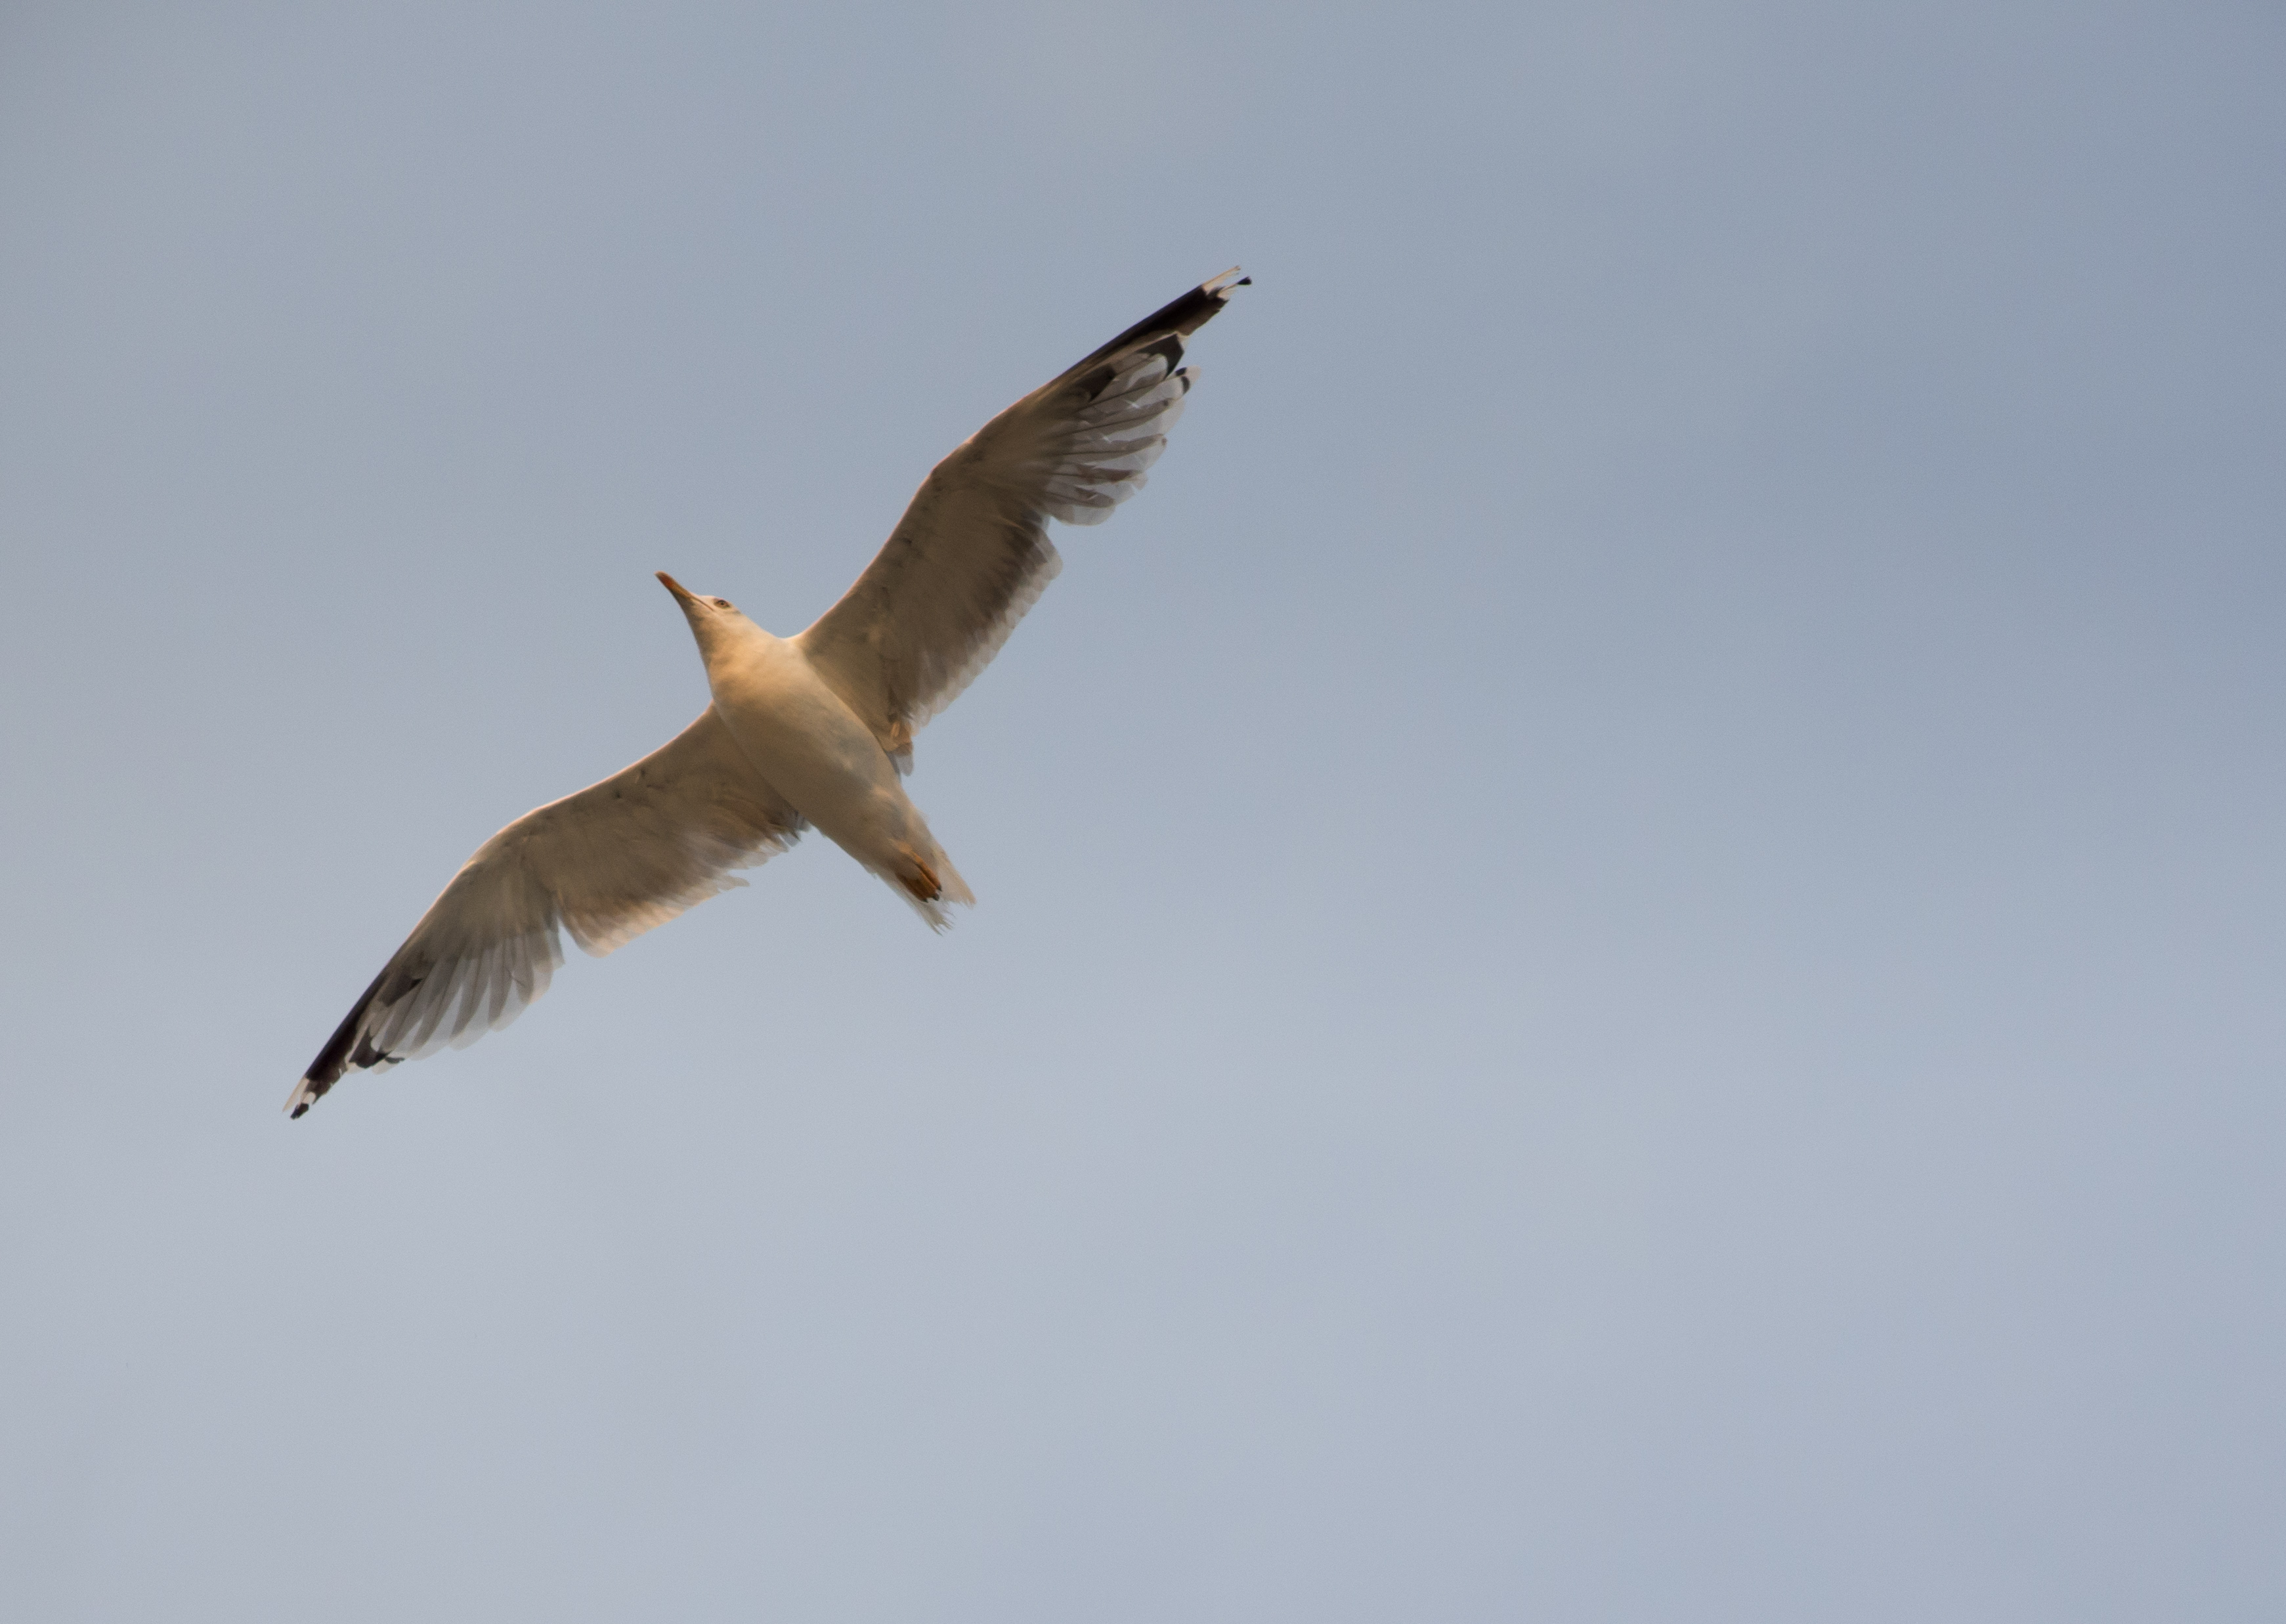 Free Image: Flying Seagull | Libreshot Public Domain Photos